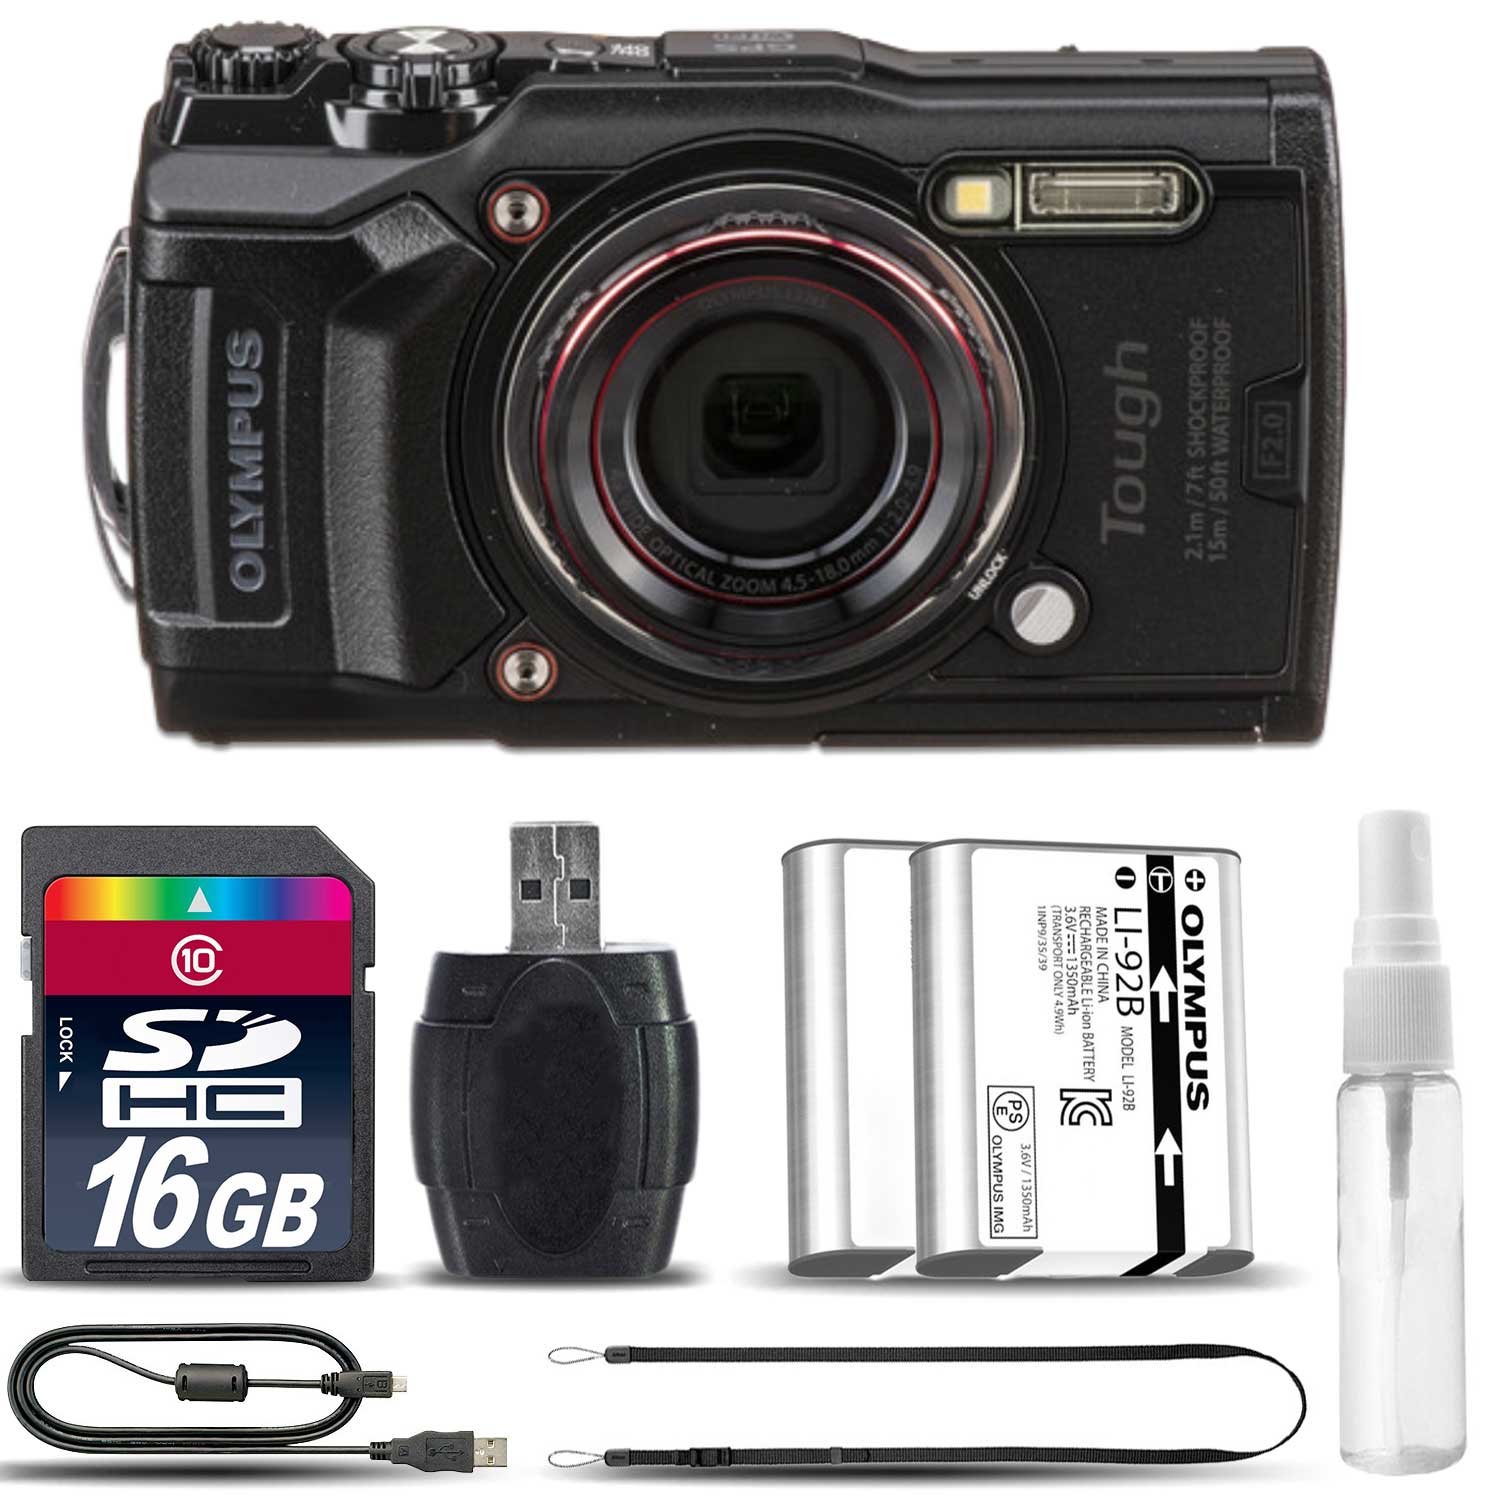 TOUGH TG-6 Digital Waterproof Camera (Black) + Extra Battery - 16GB Kit *FREE SHIPPING*